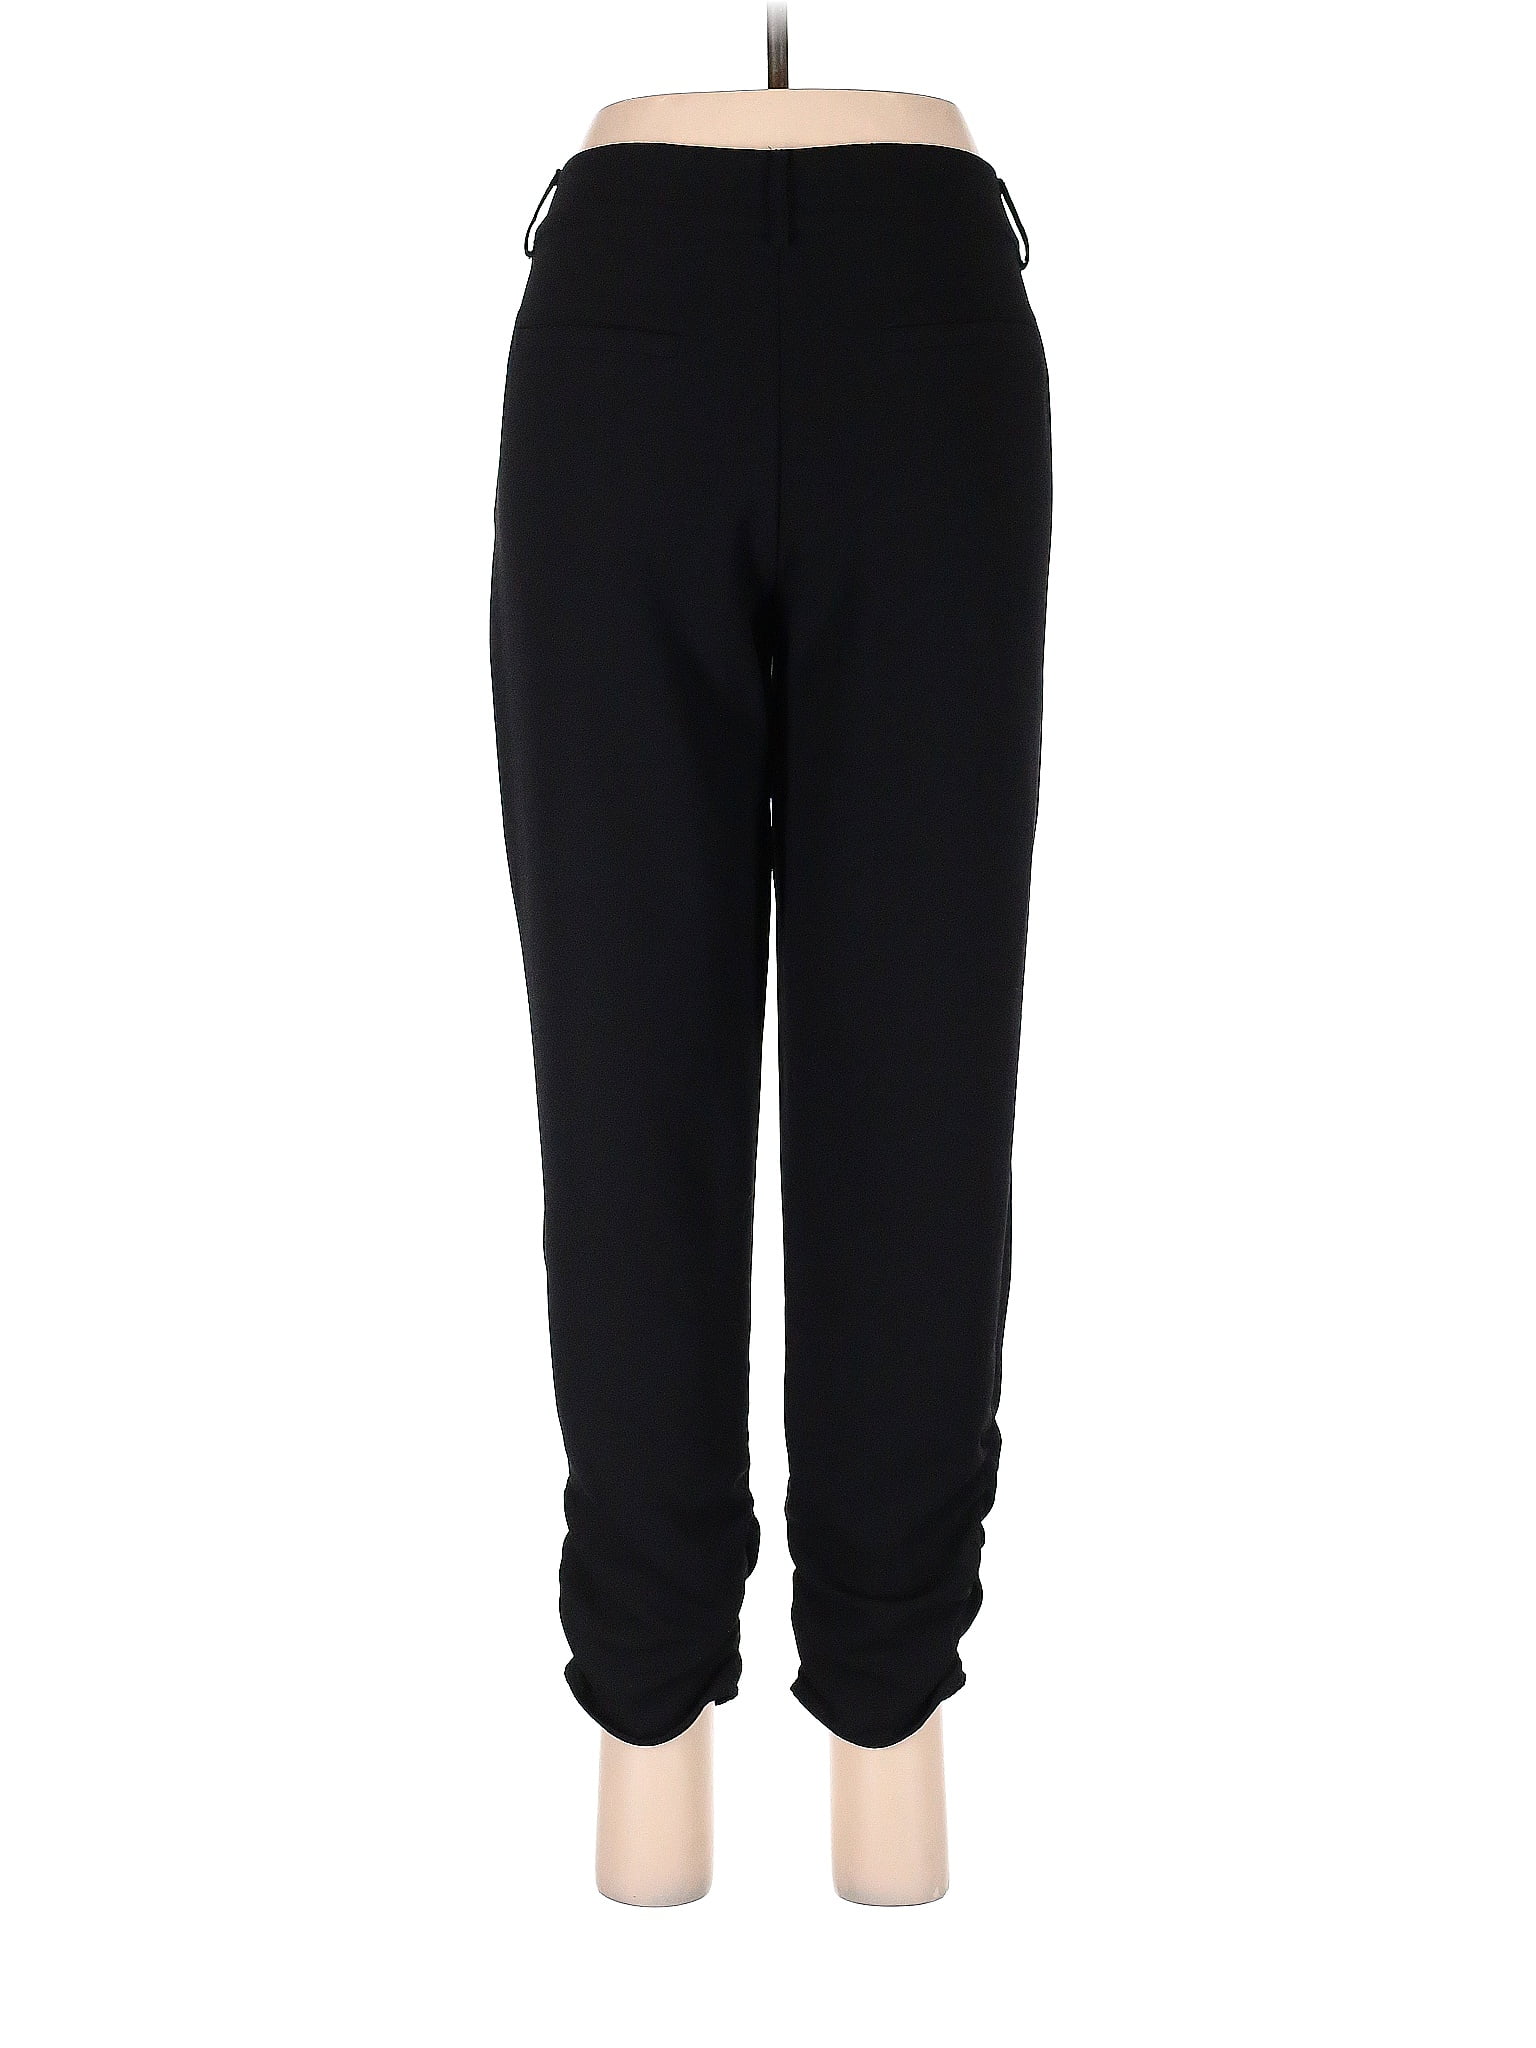 Parker 100% Polyester Solid Black Dress Pants Size 6 - 83% off